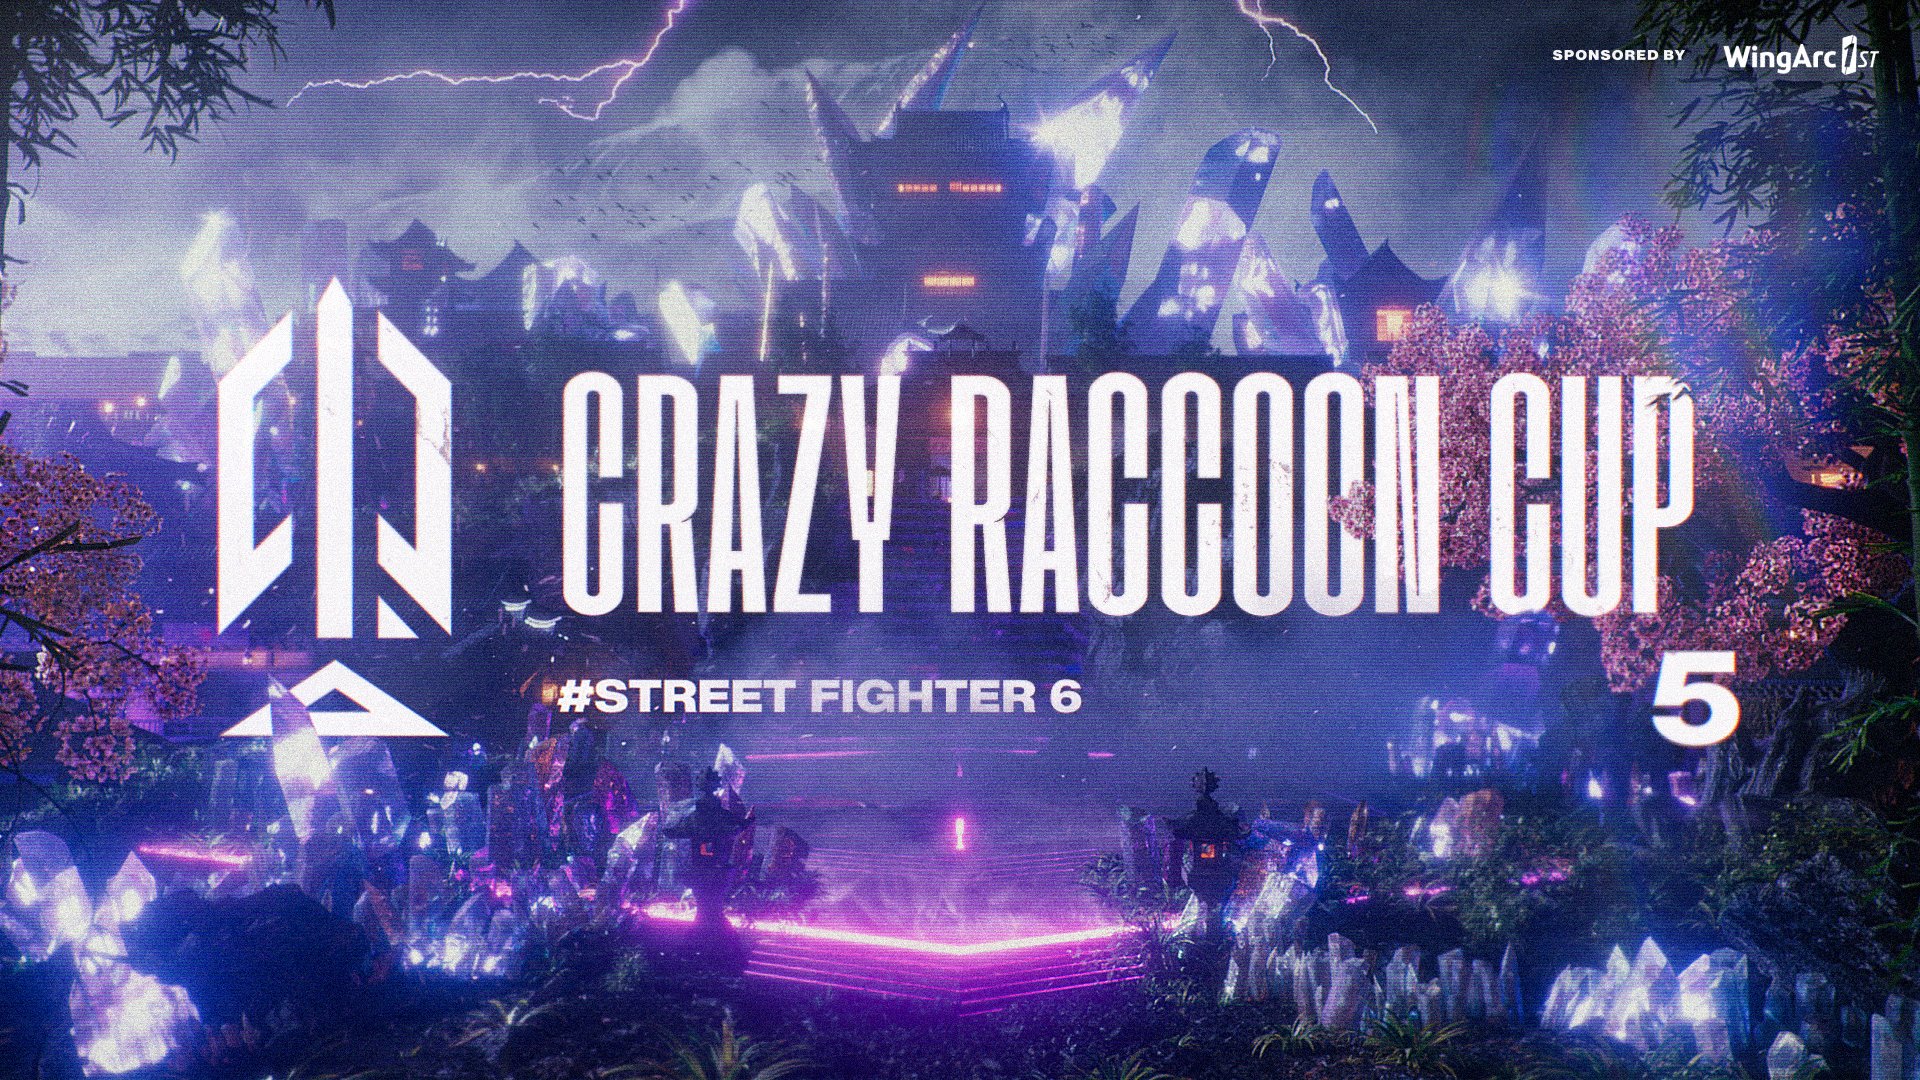 第5回 Crazy Raccoon Cup Street Fighter 6